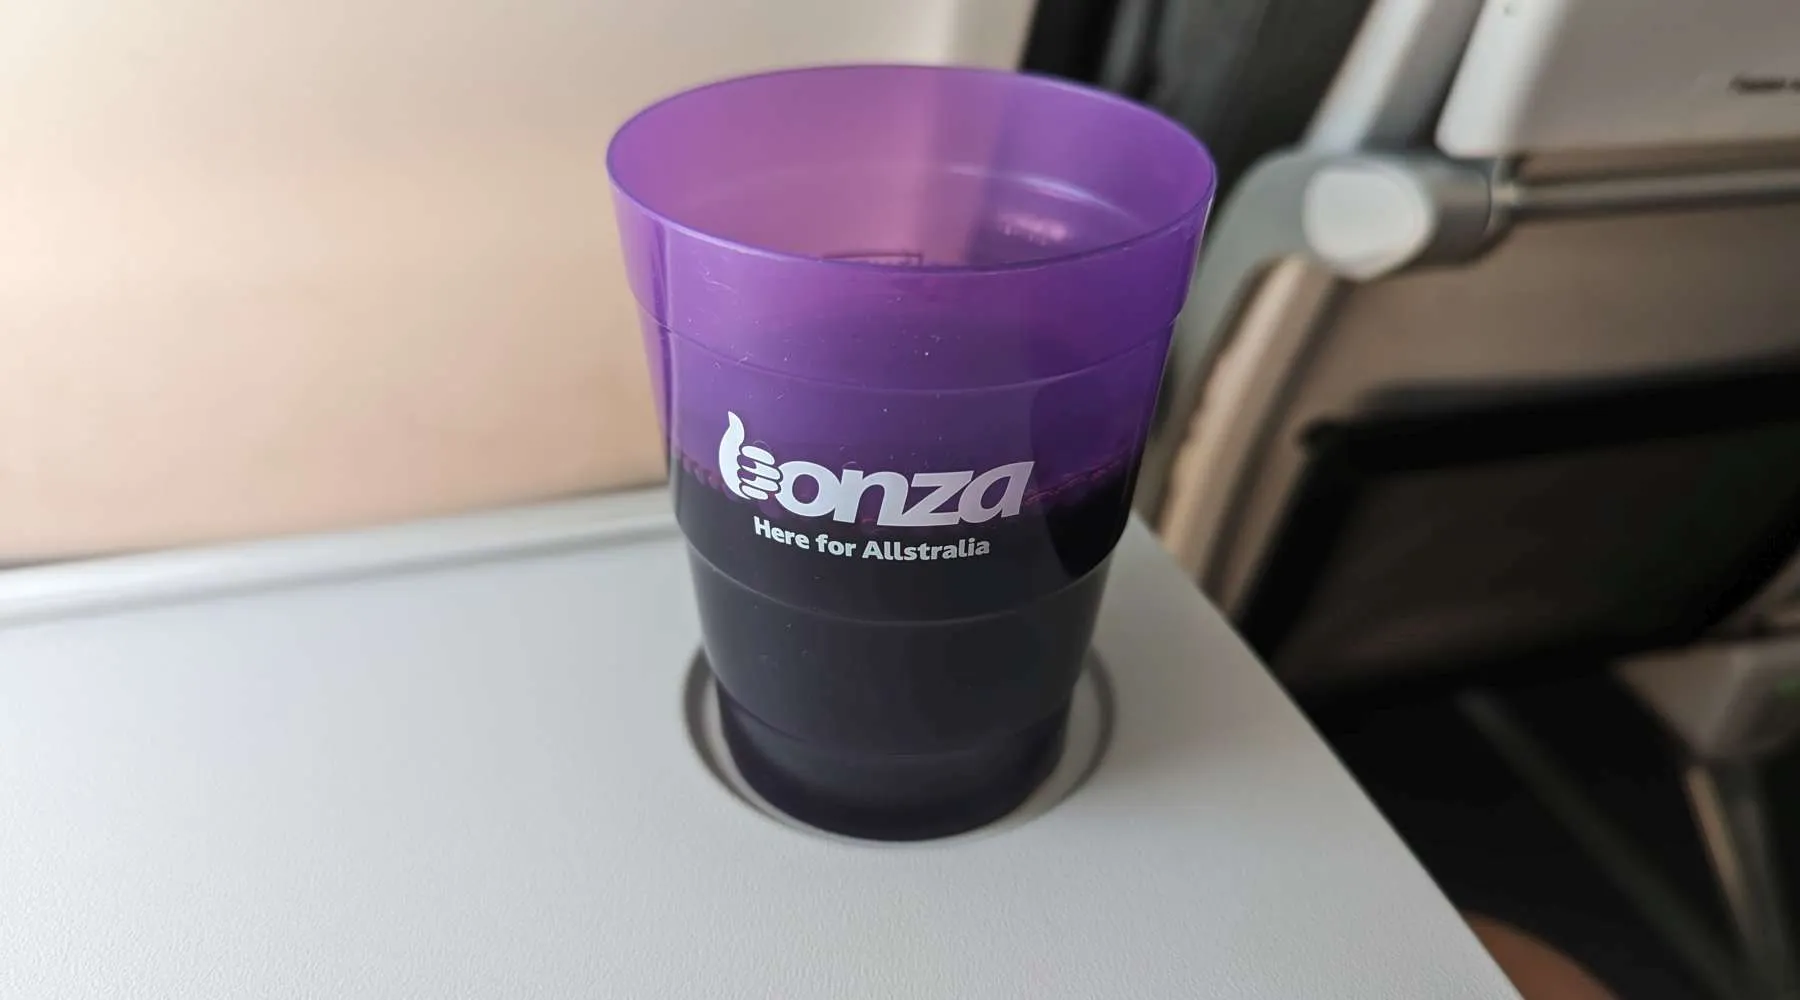 Glass of Bonza wine